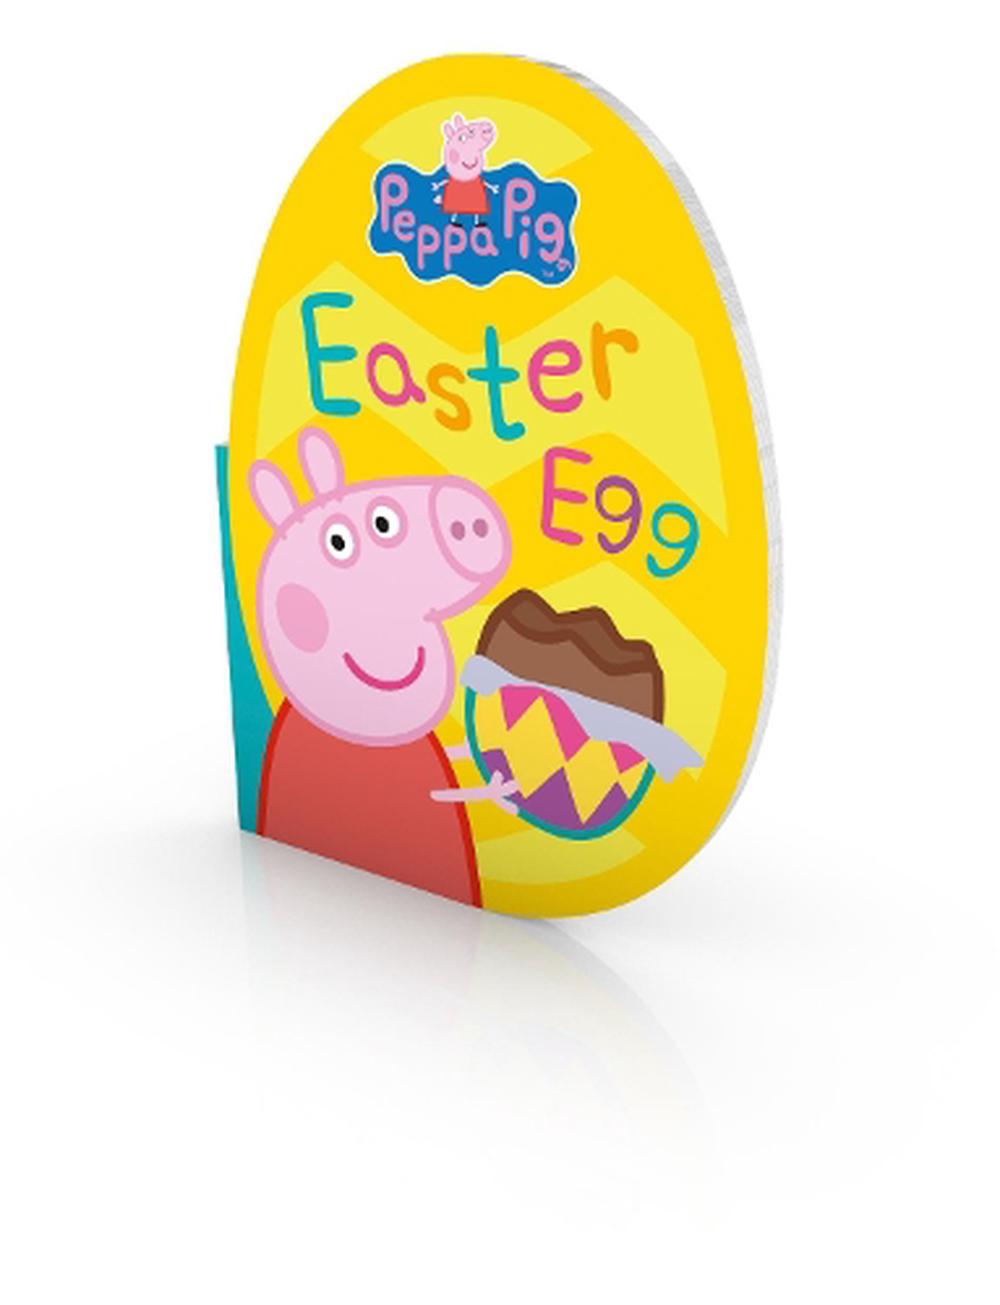 Peppa Pig: Easter Egg by Peppa Pig (English) Board Books Book Free ...